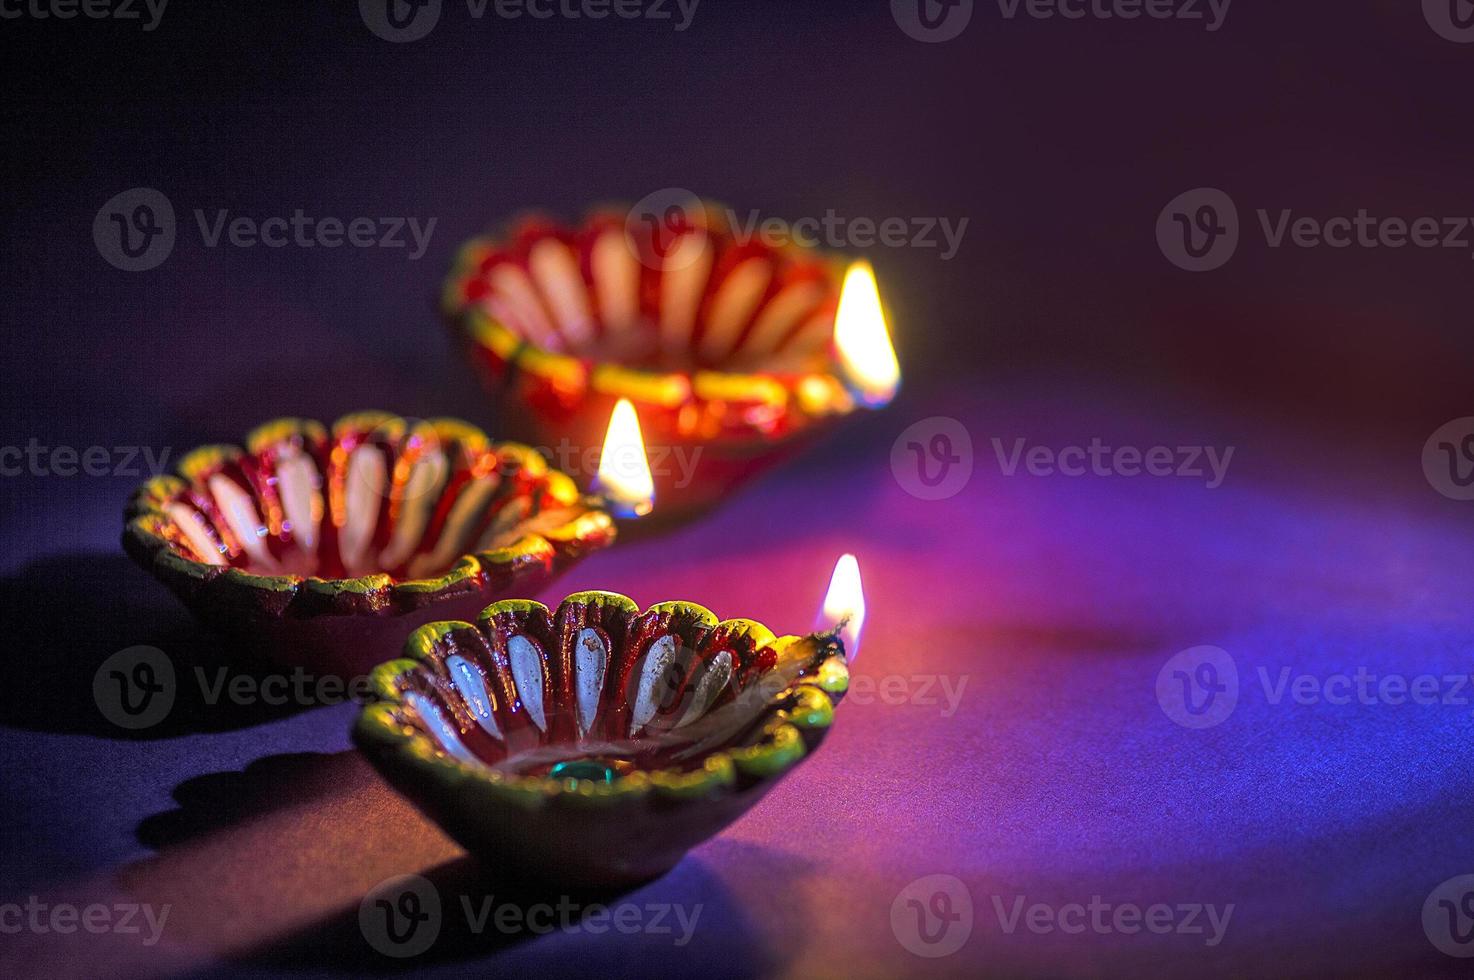 klei diya lampen verlicht tijdens diwali viering. wenskaart ontwerp indisch hindoe licht festival genaamd diwali foto